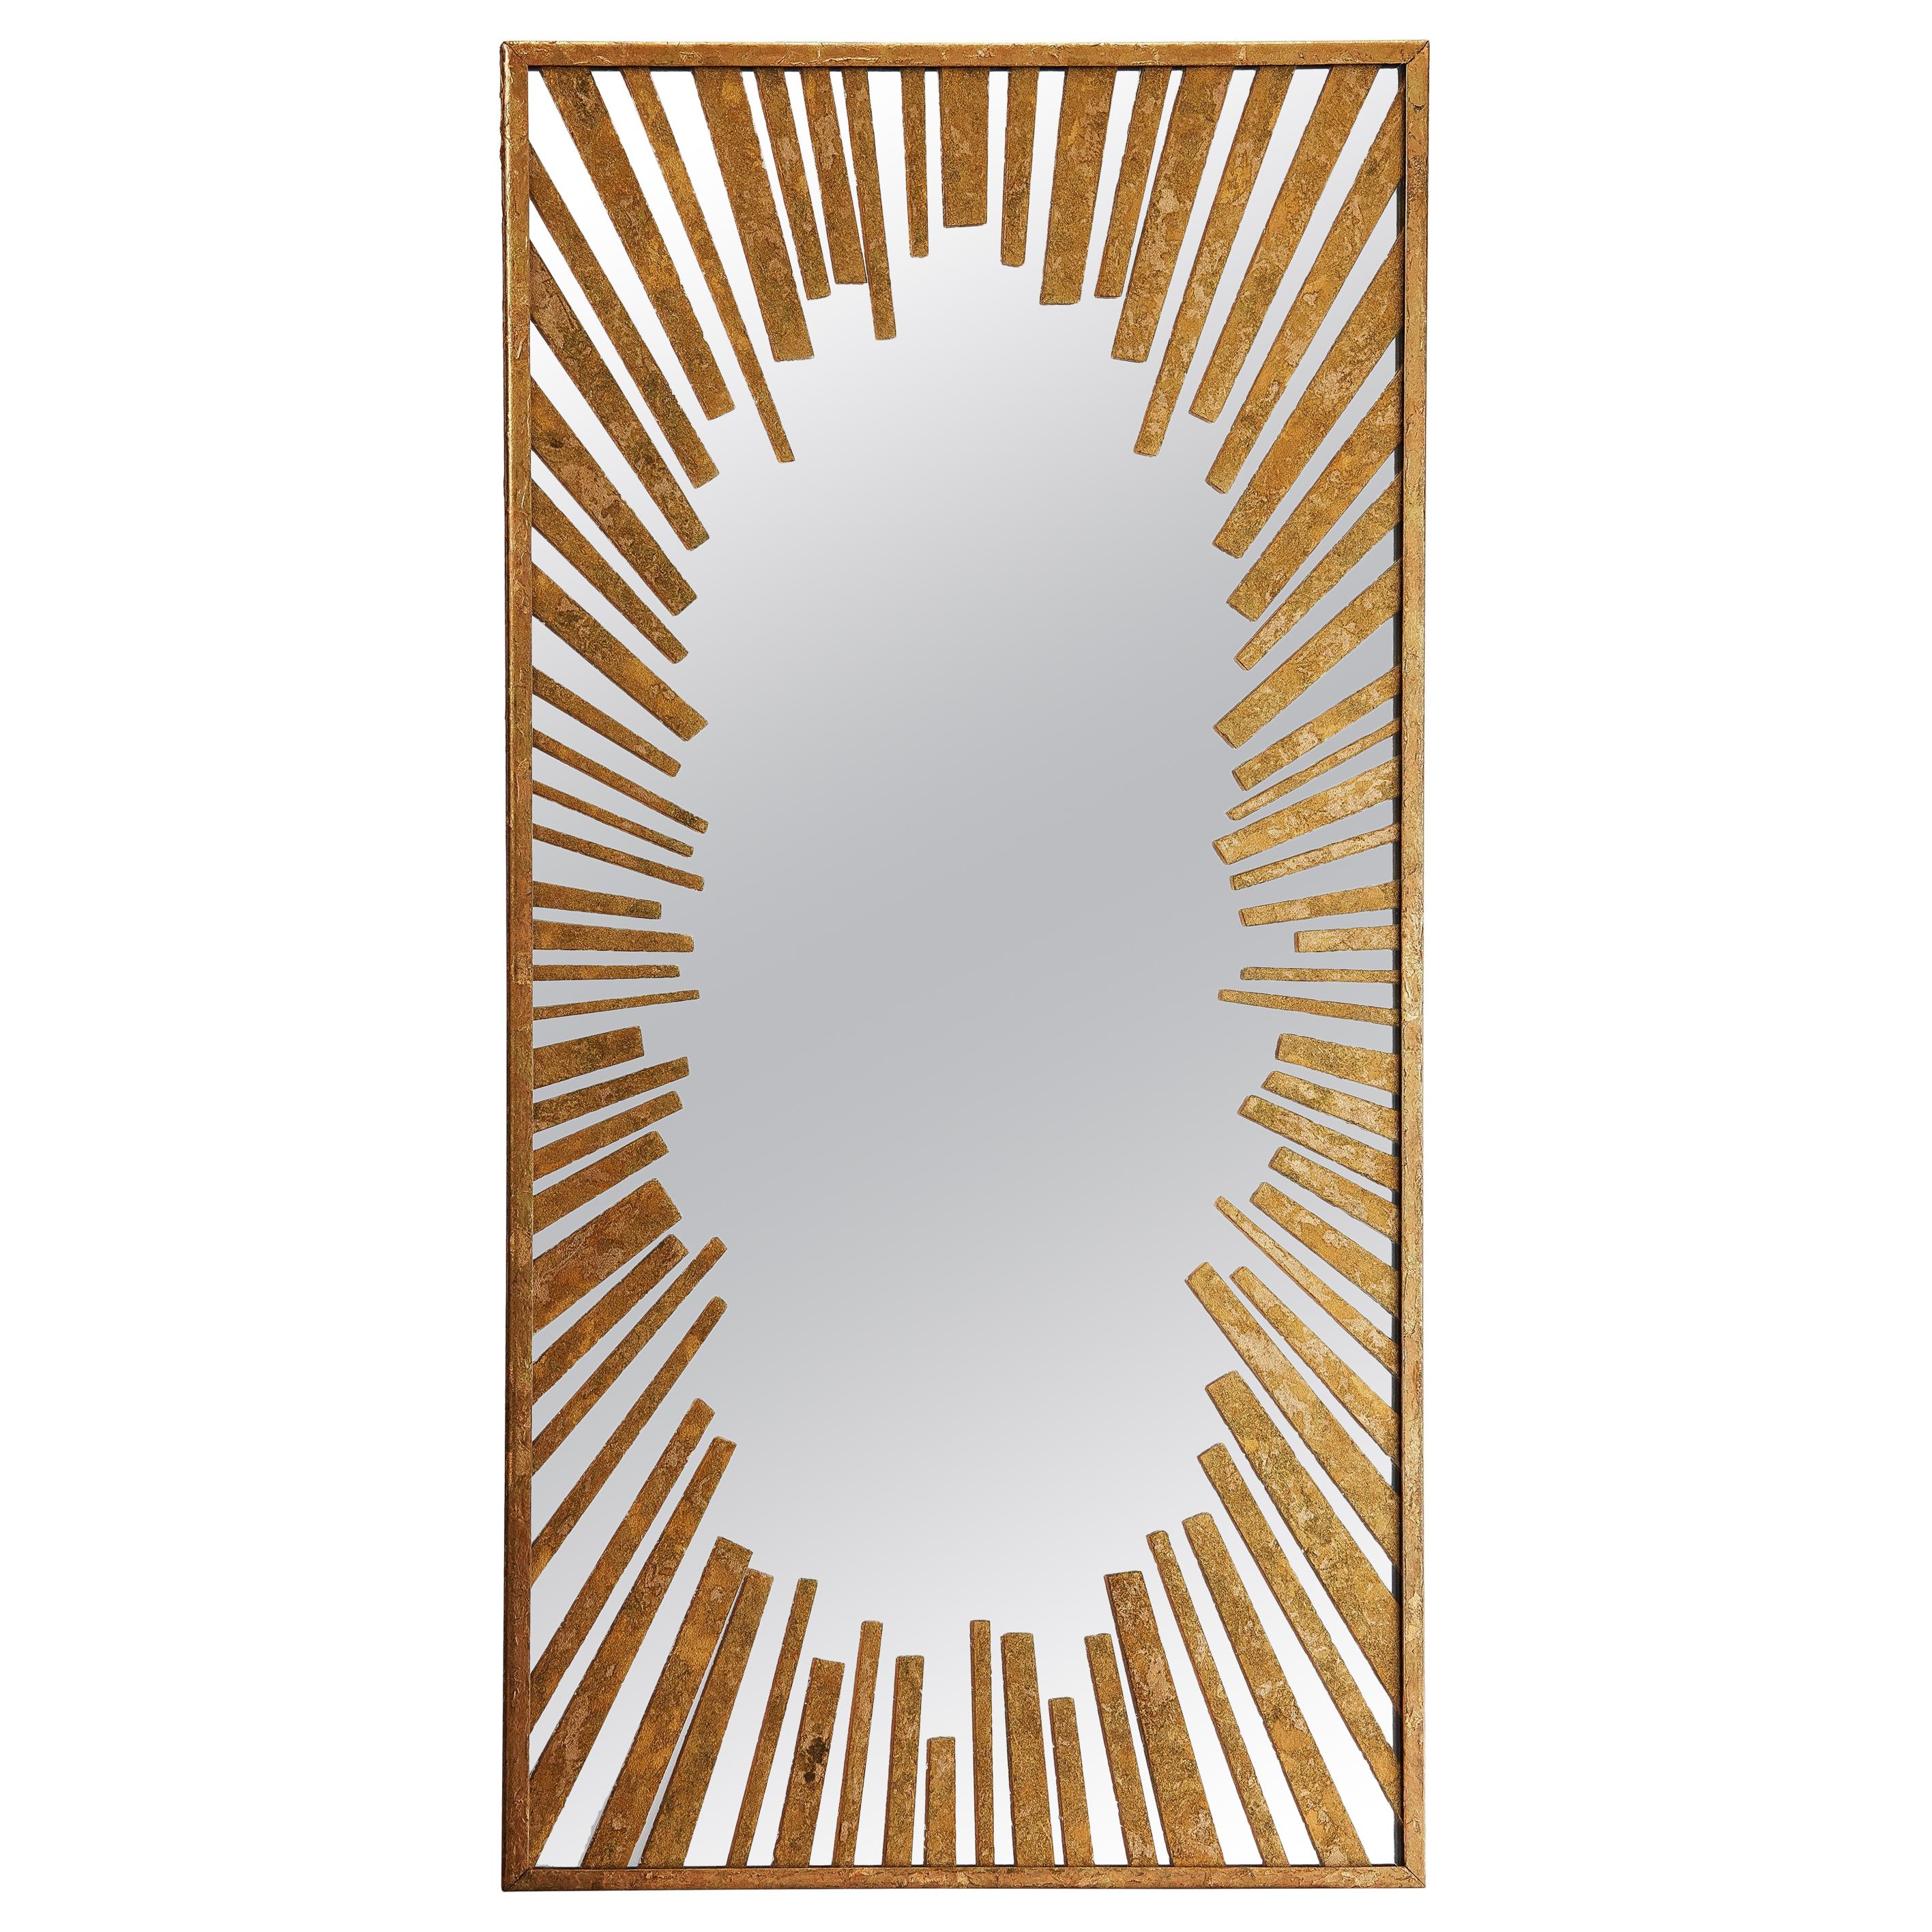 Sunburst Rectangular Mirror with Radiation Pattern in Gold Leaf, Customizable For Sale